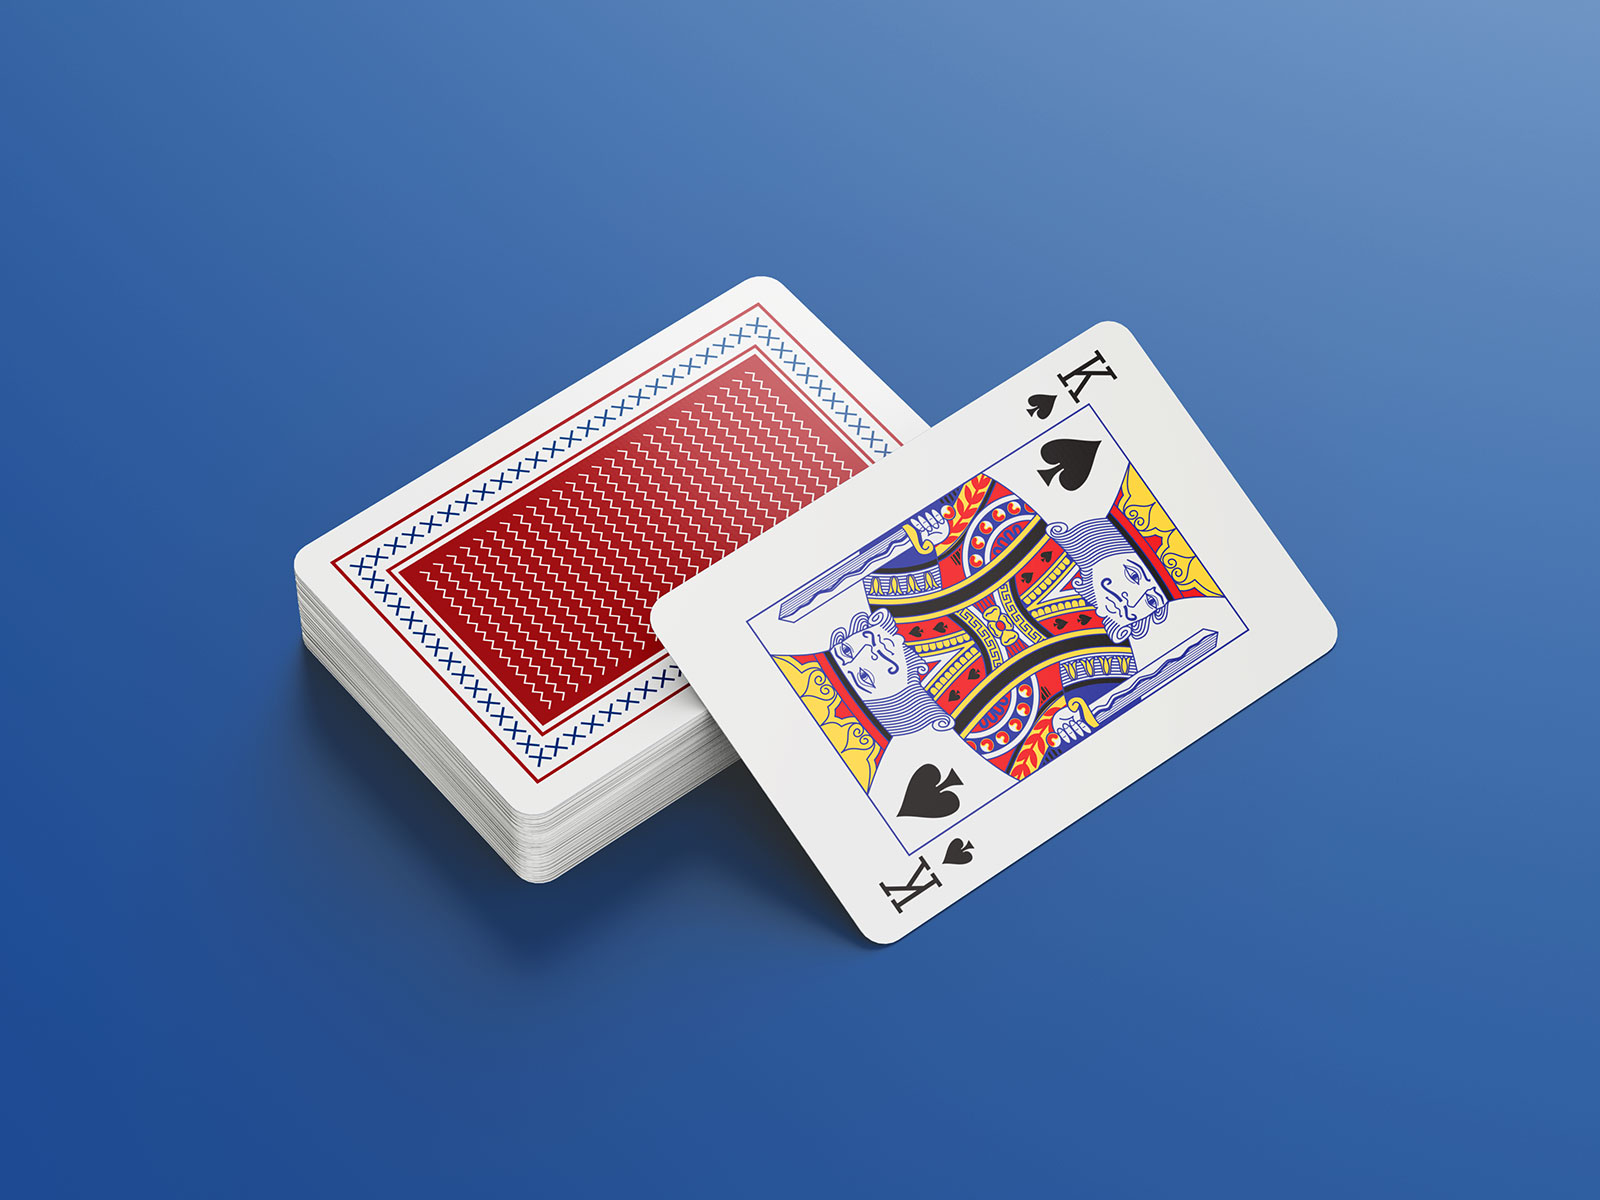 Download Free Playing Card Deck & Packaging Mockup PSD - Good Mockups